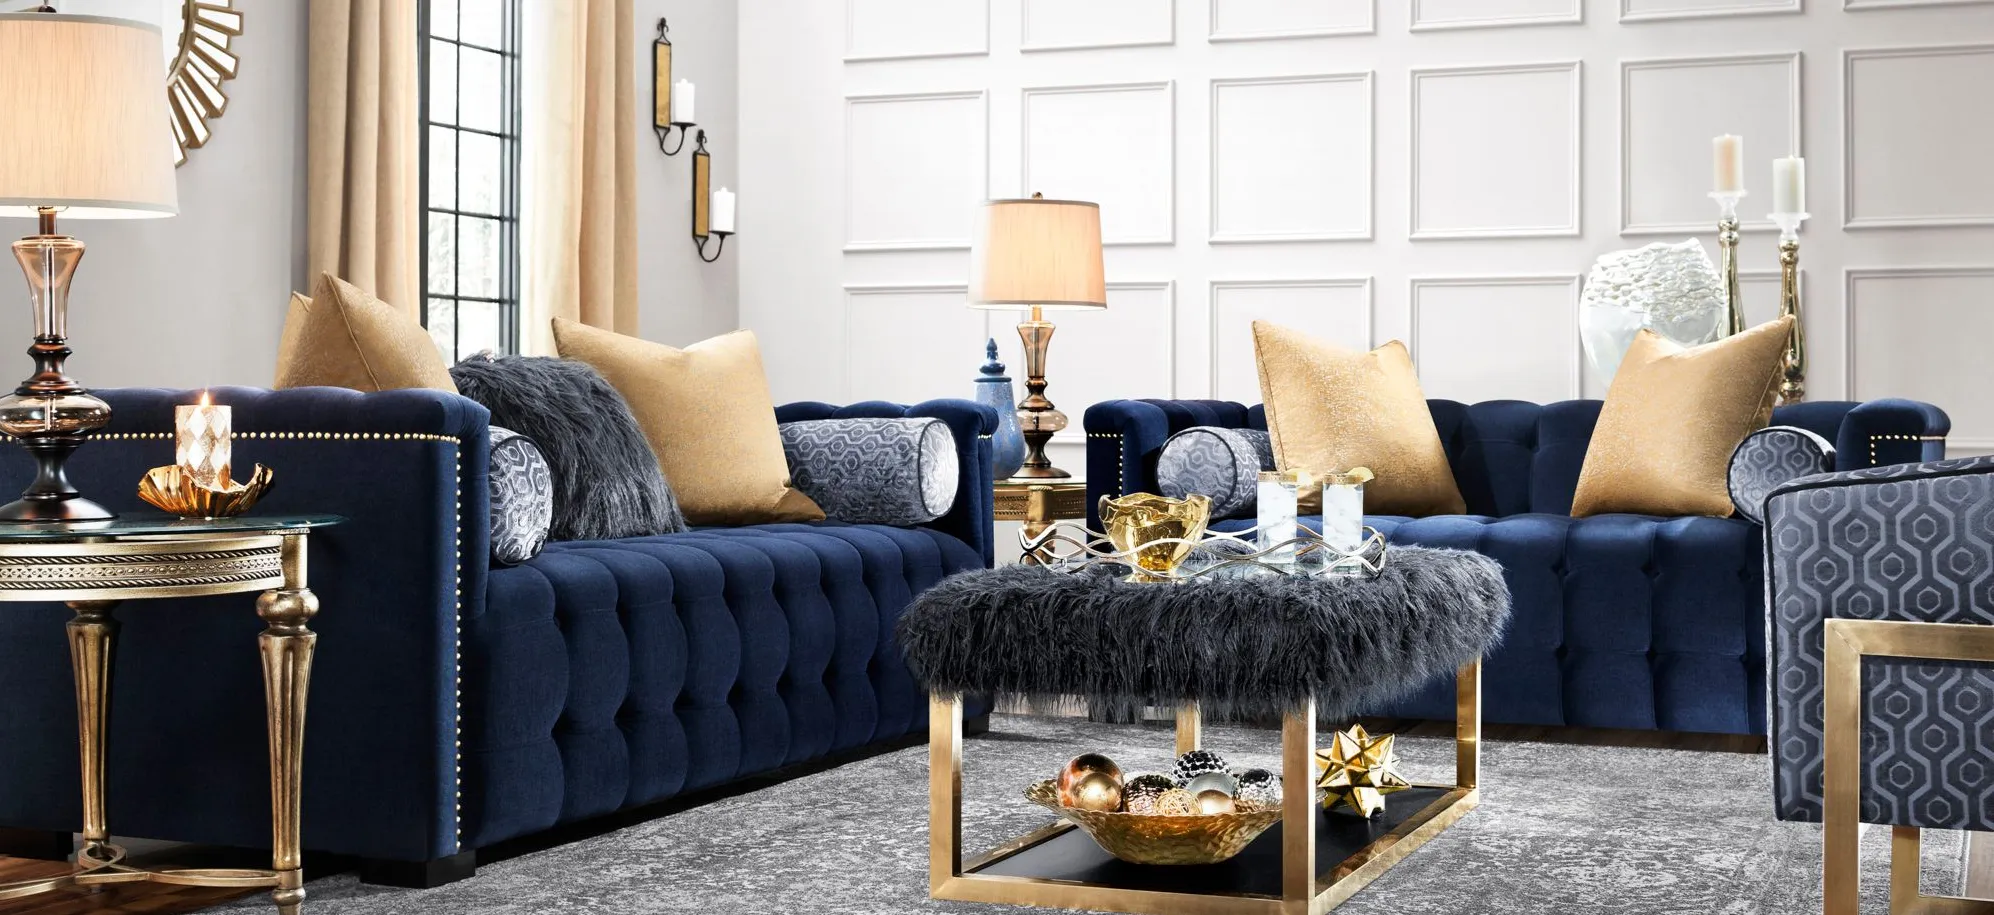 Diana 2-pc. Sofa and Loveseat Set in Indigo by Aria Designs